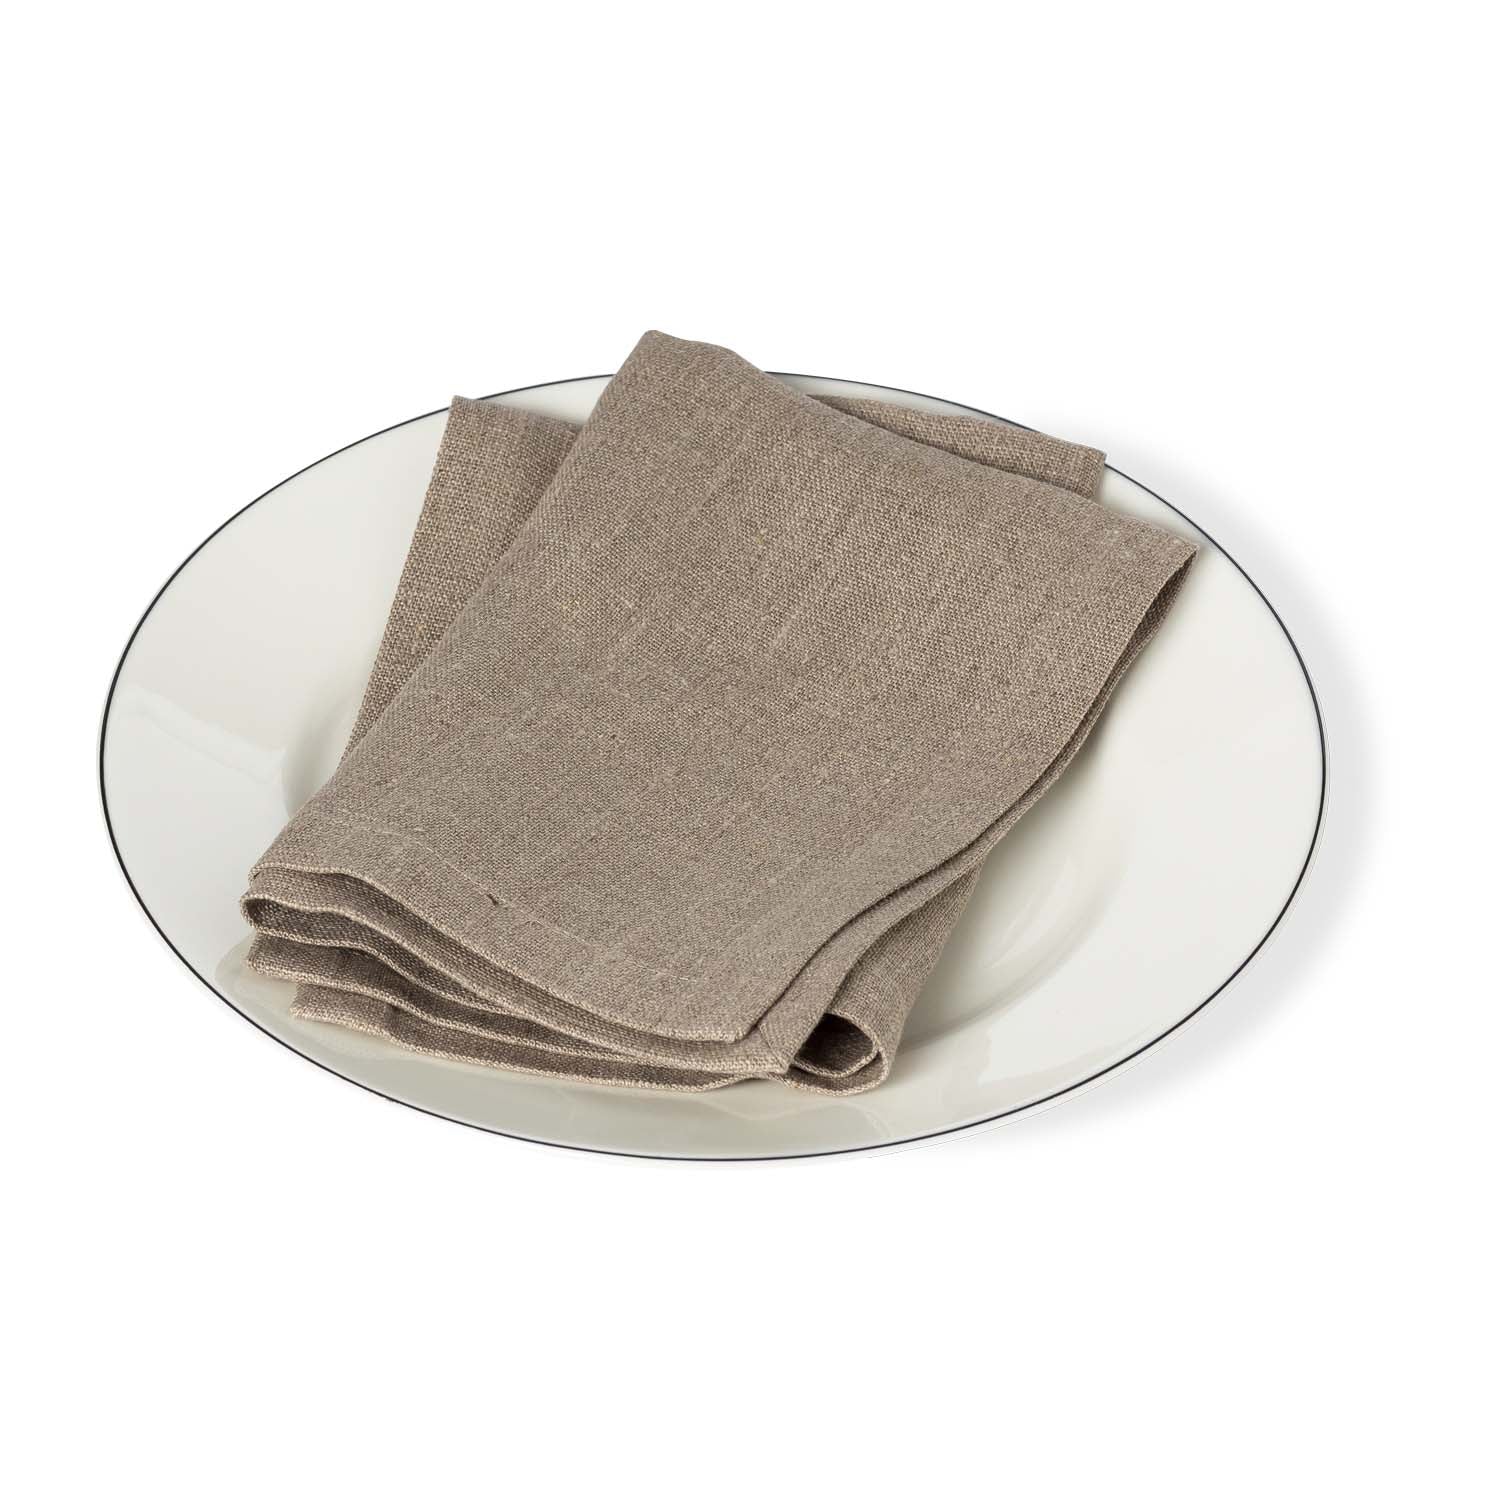 Wholesale Natural Linen Table Napkins - Buy Wholesale Natural Linen Table  Napkins Product on